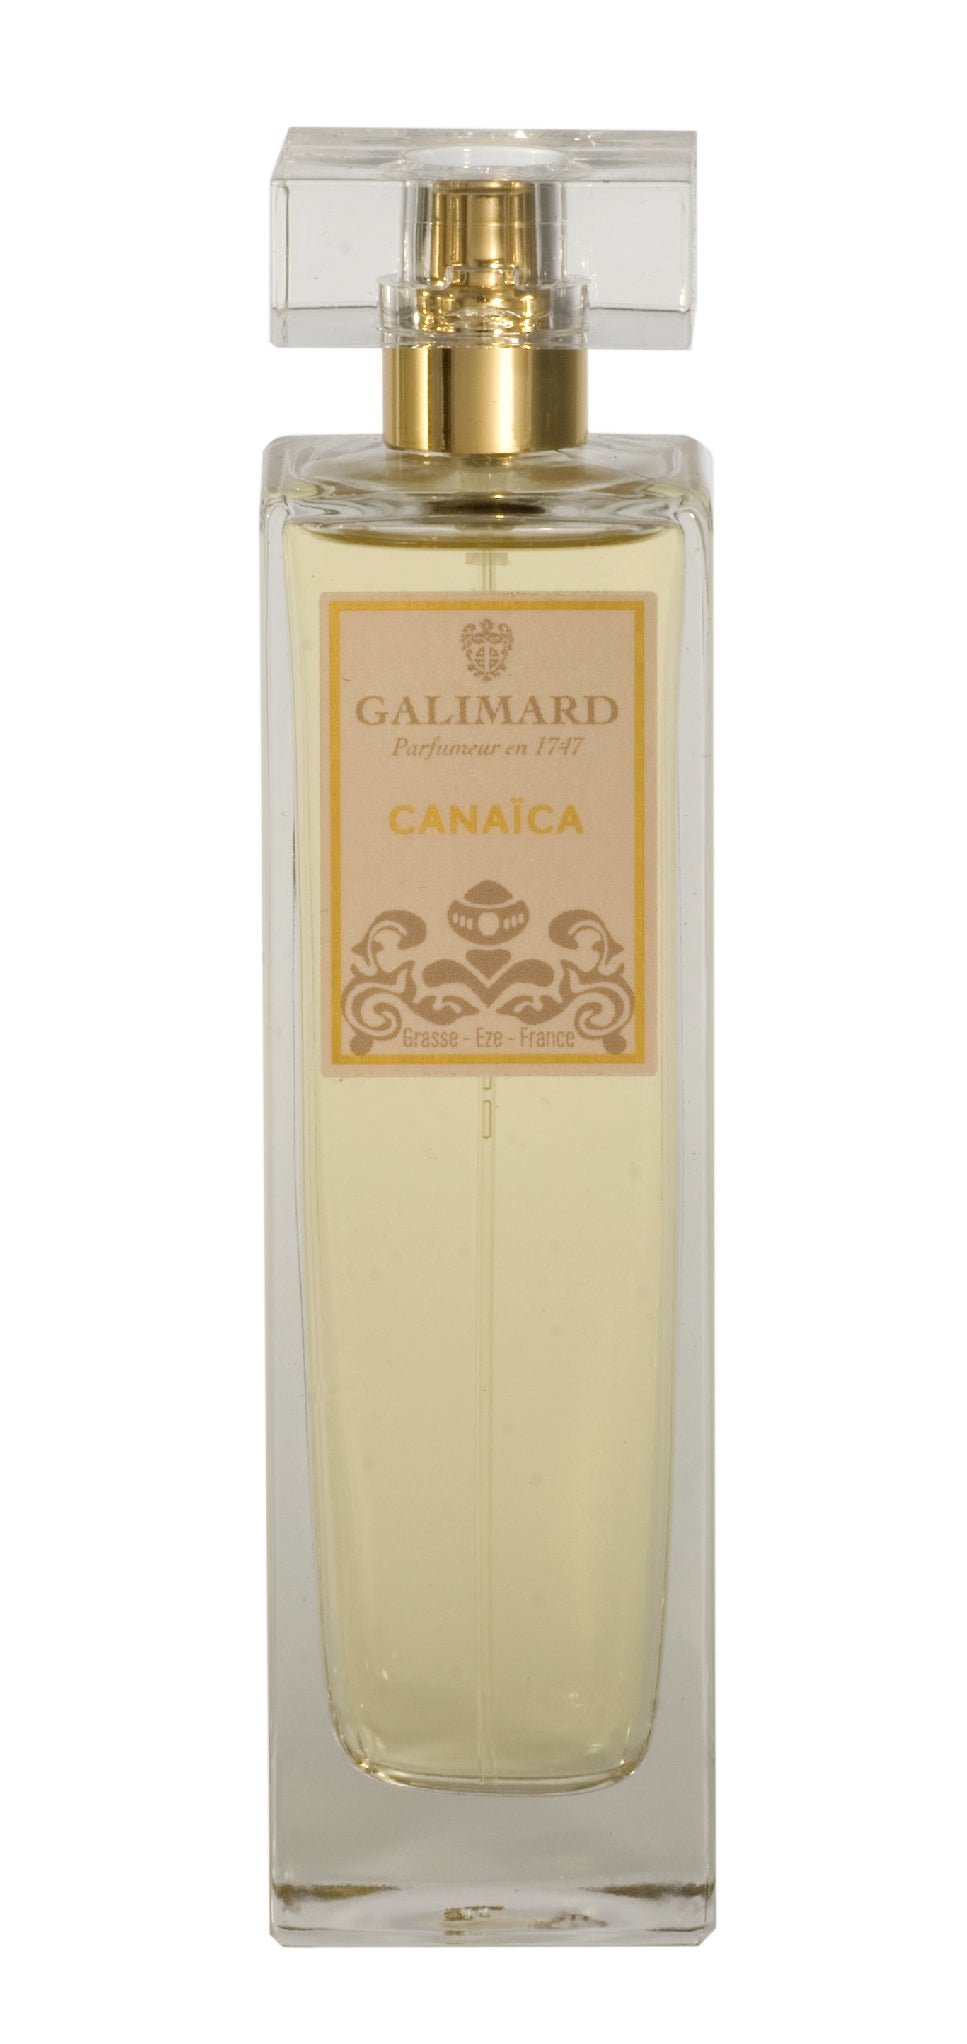 Galimard Canaica parfumūdens 100 ml